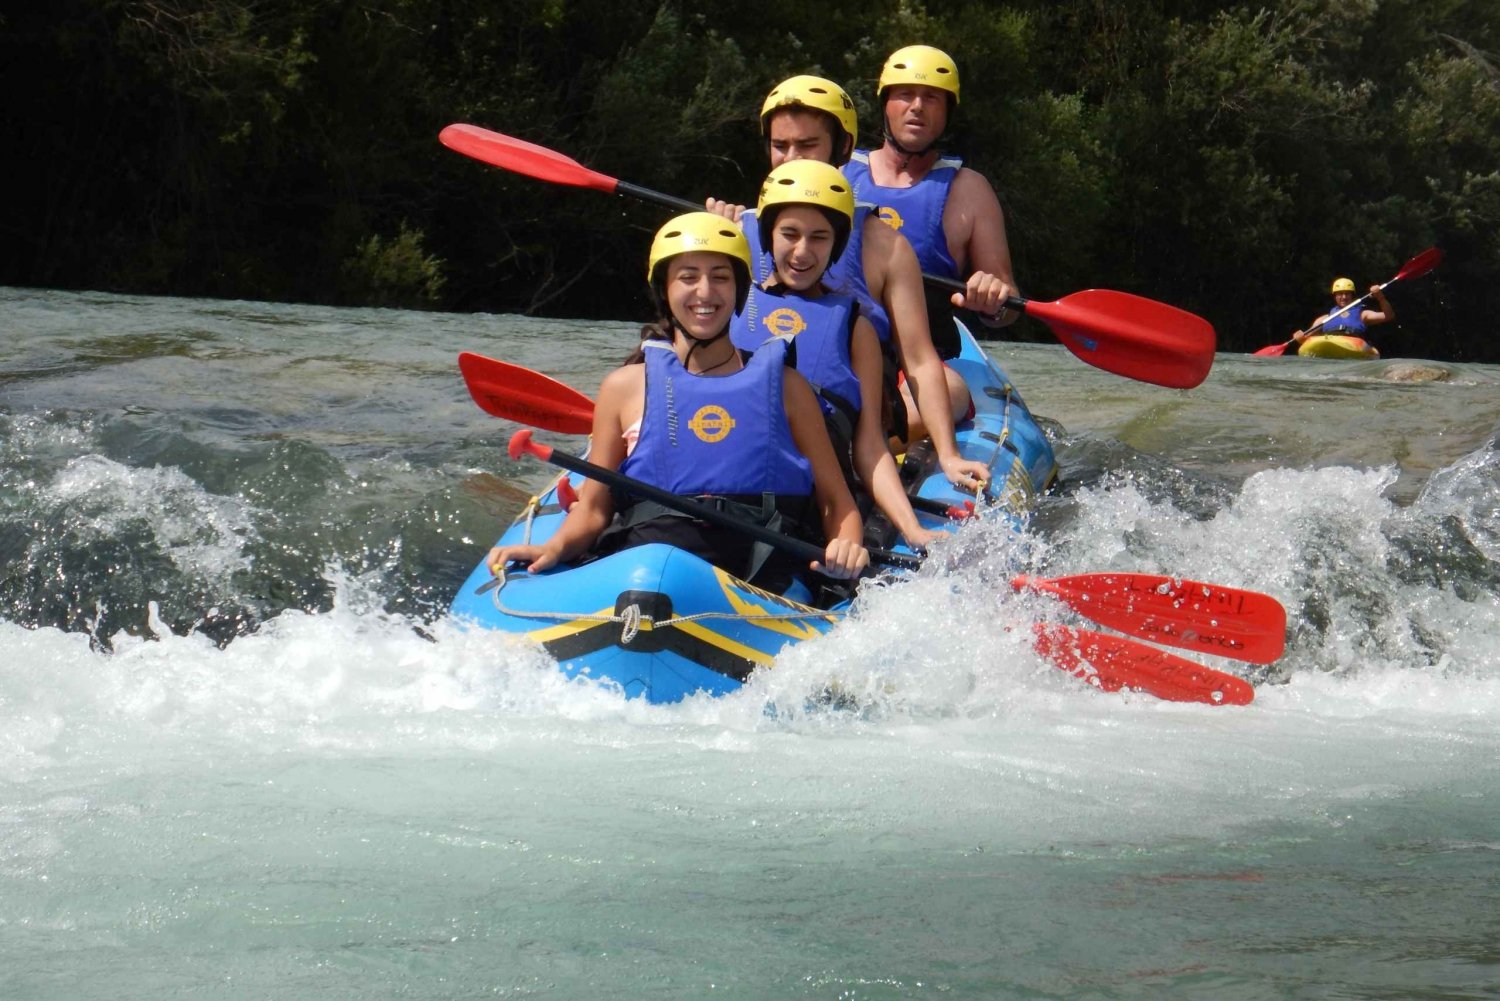 Radovljica: Rafting Tour auf der Sava mit Mini Raft